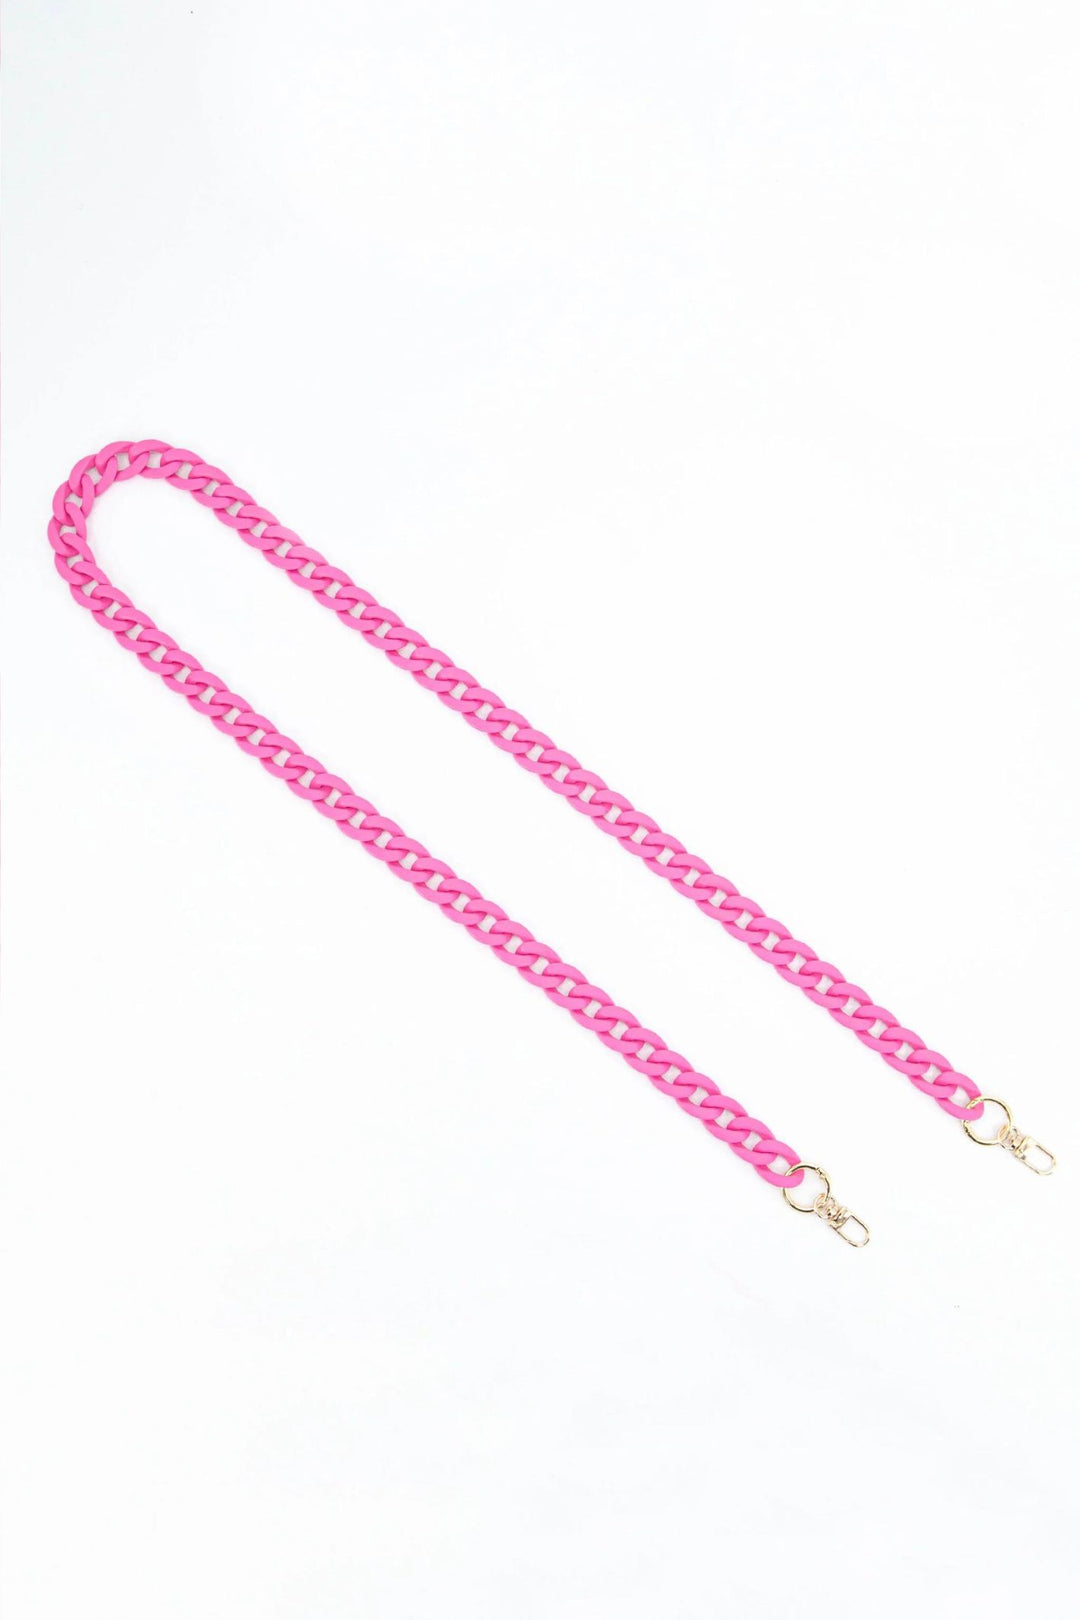 Bubblegum Pink Acrylic Cuban Style Chain Link Bag Strap